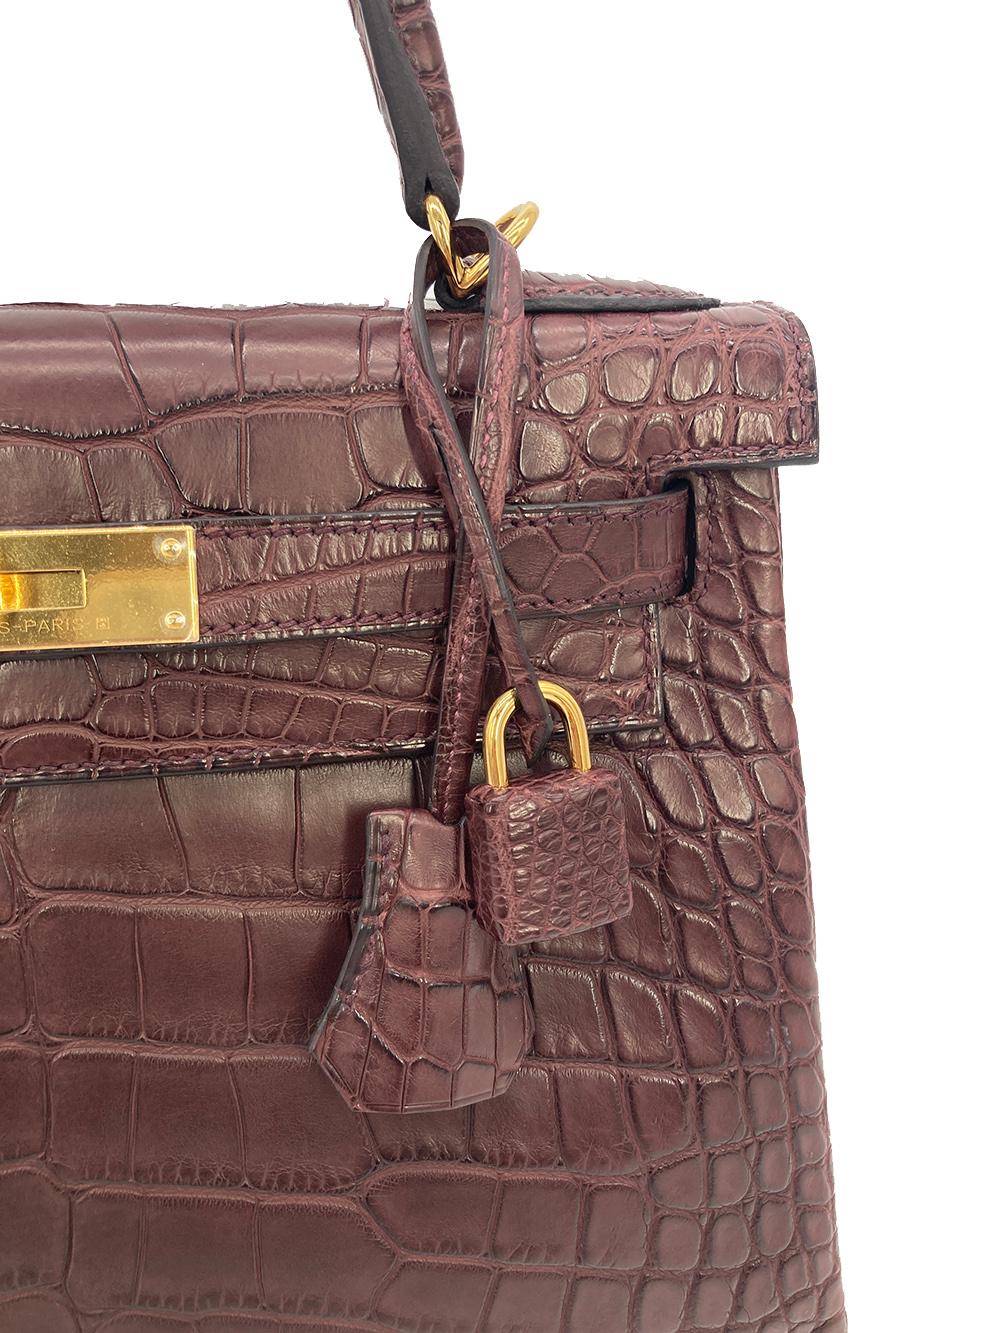 NEW Hermès Kelly 28 Bordeaux Matte Alligator Gold Hardware GHW RARE For Sale 1